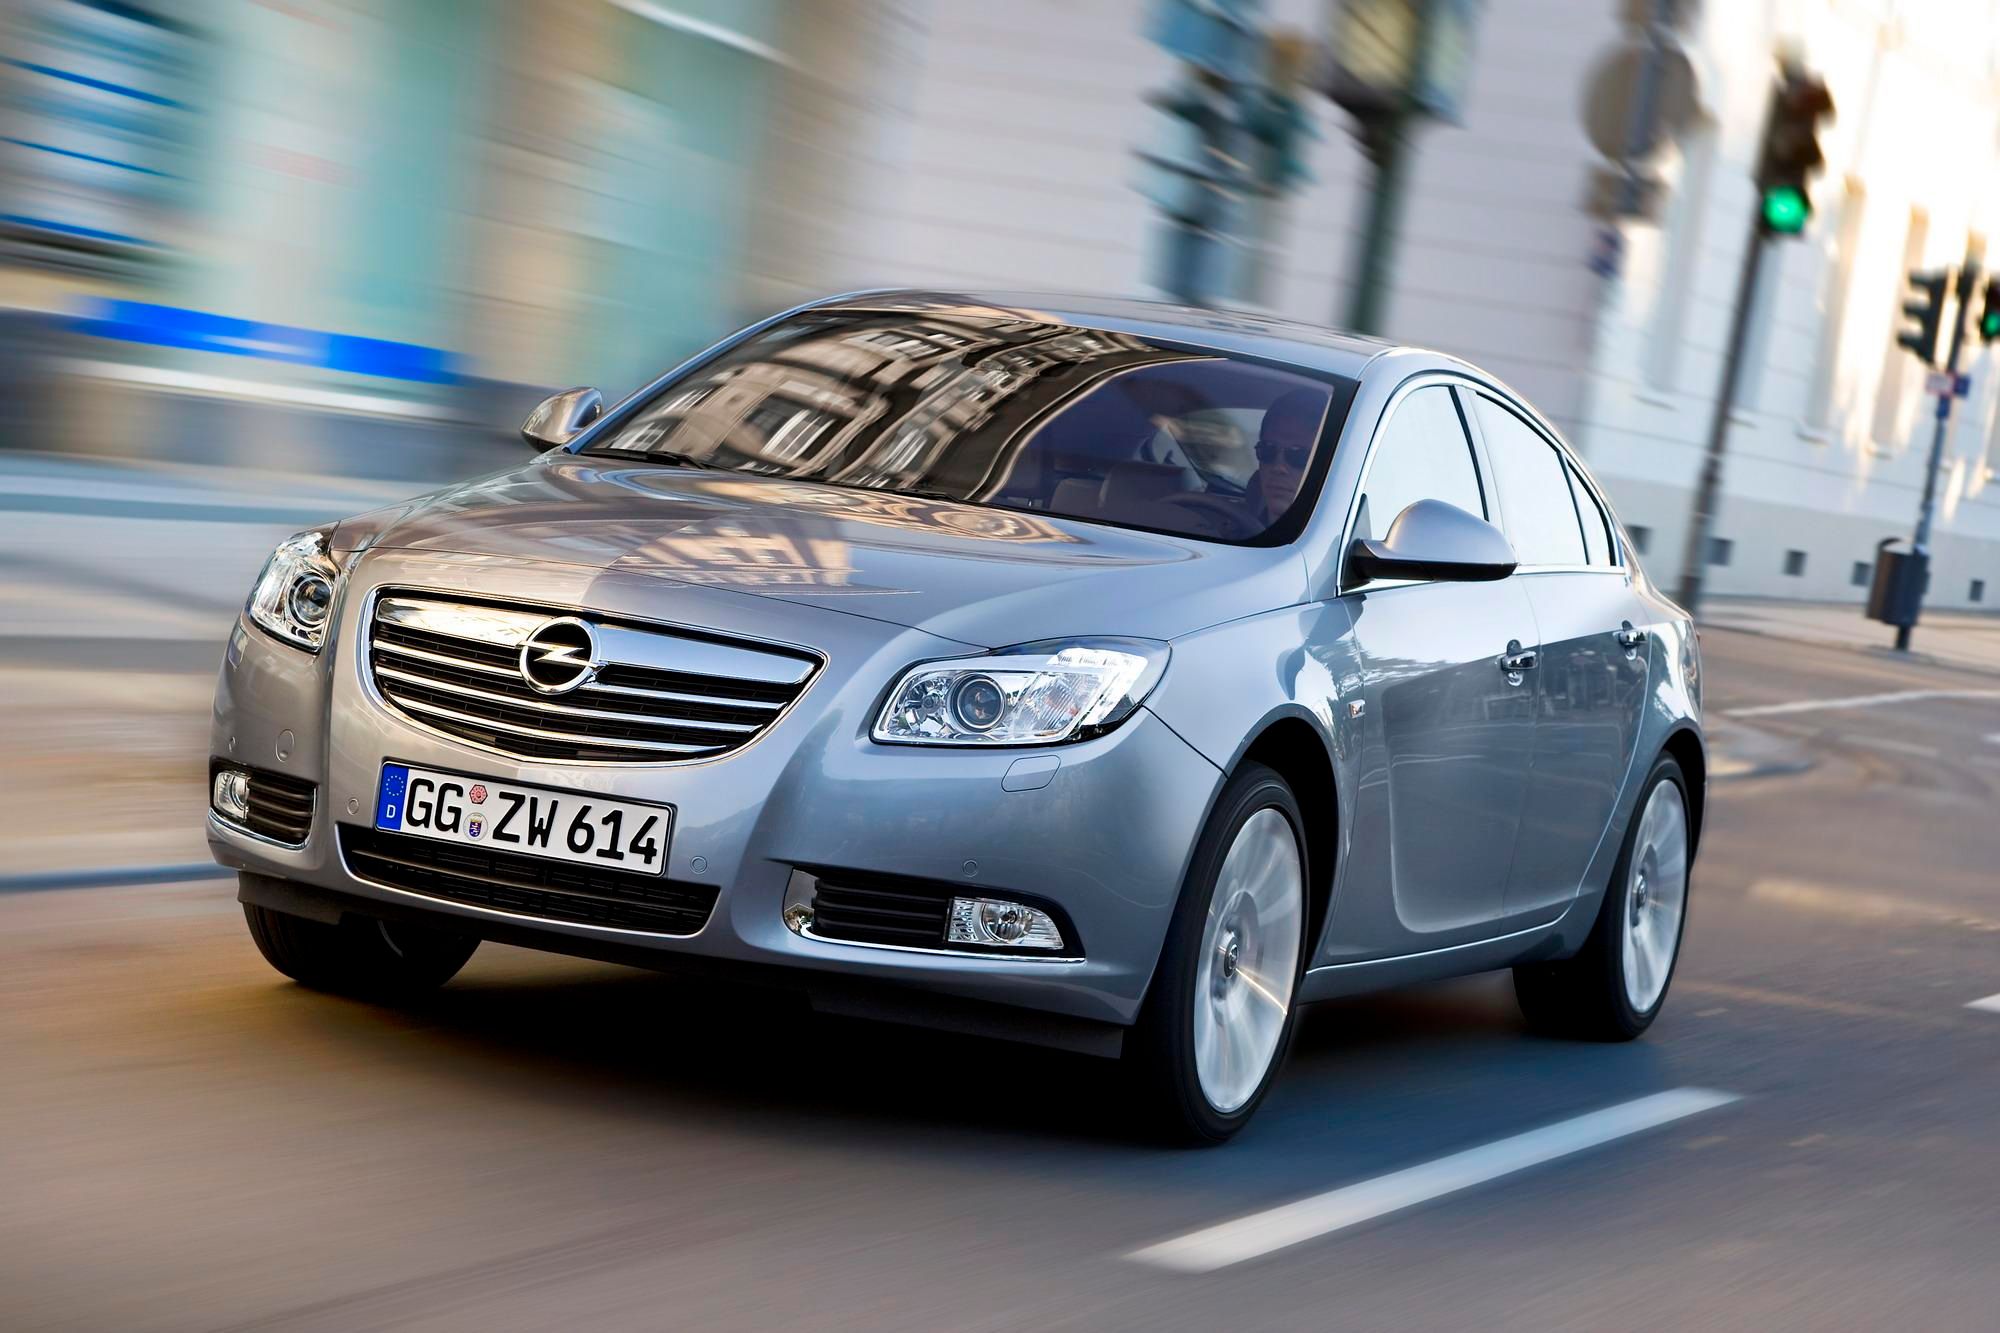 Hot Wheels: Updated Opel Insignia debuts